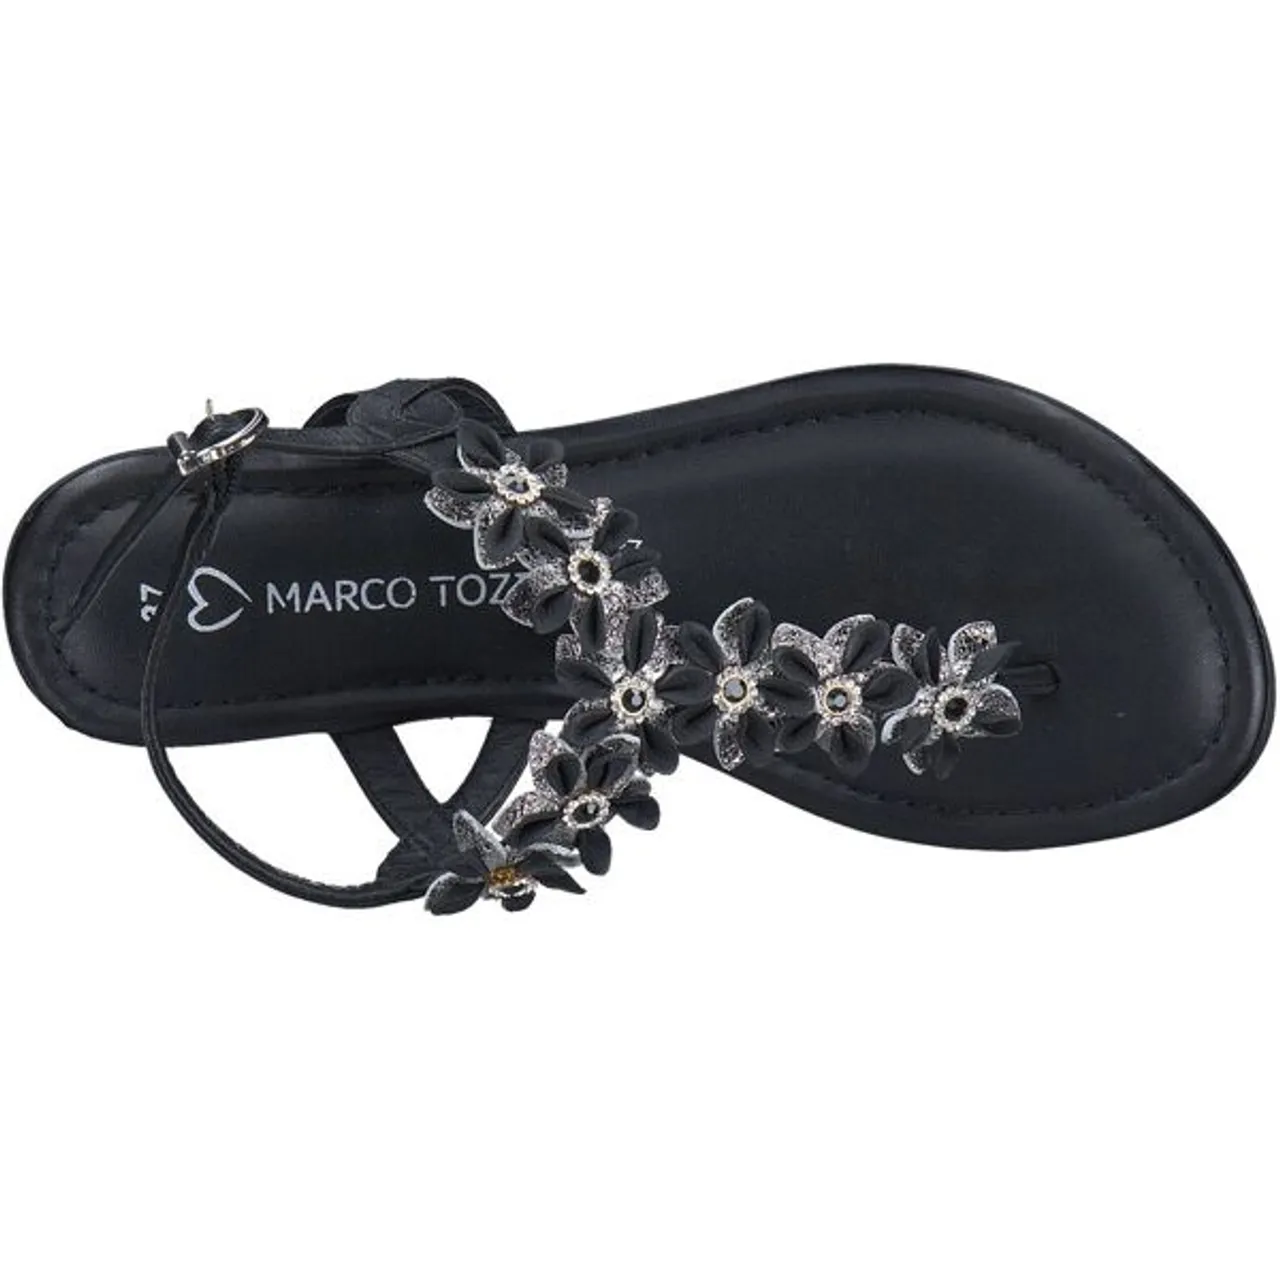 Sandale MARCO TOZZI Gr. 38, schwarz Damen Schuhe Zehensteg-Sandalen